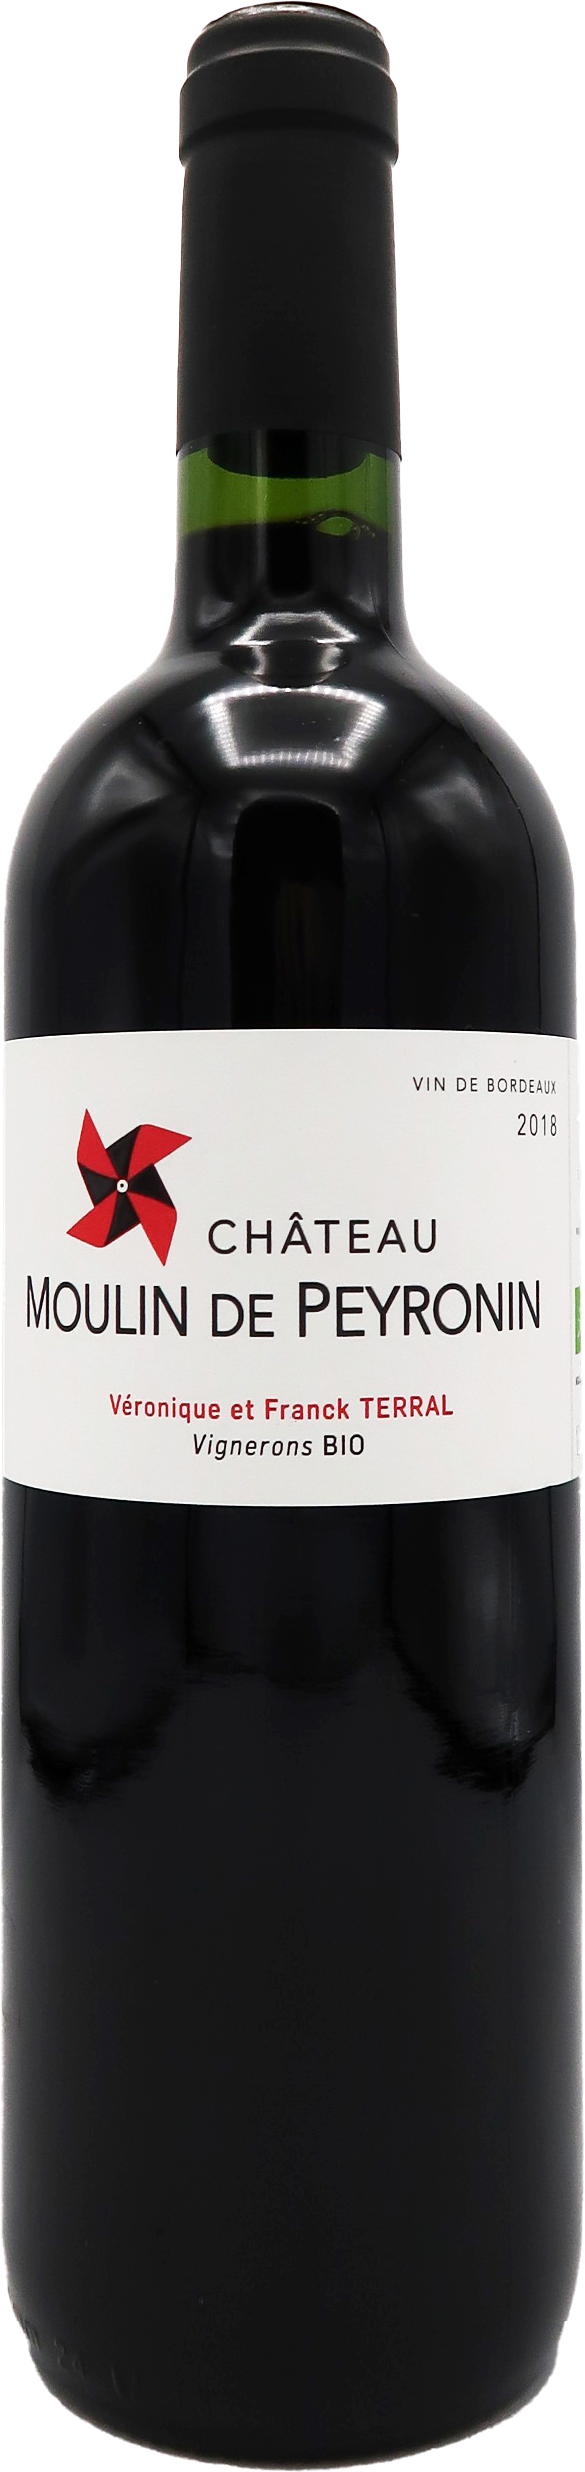 Château Moulin de Peyronin Rouge 2018